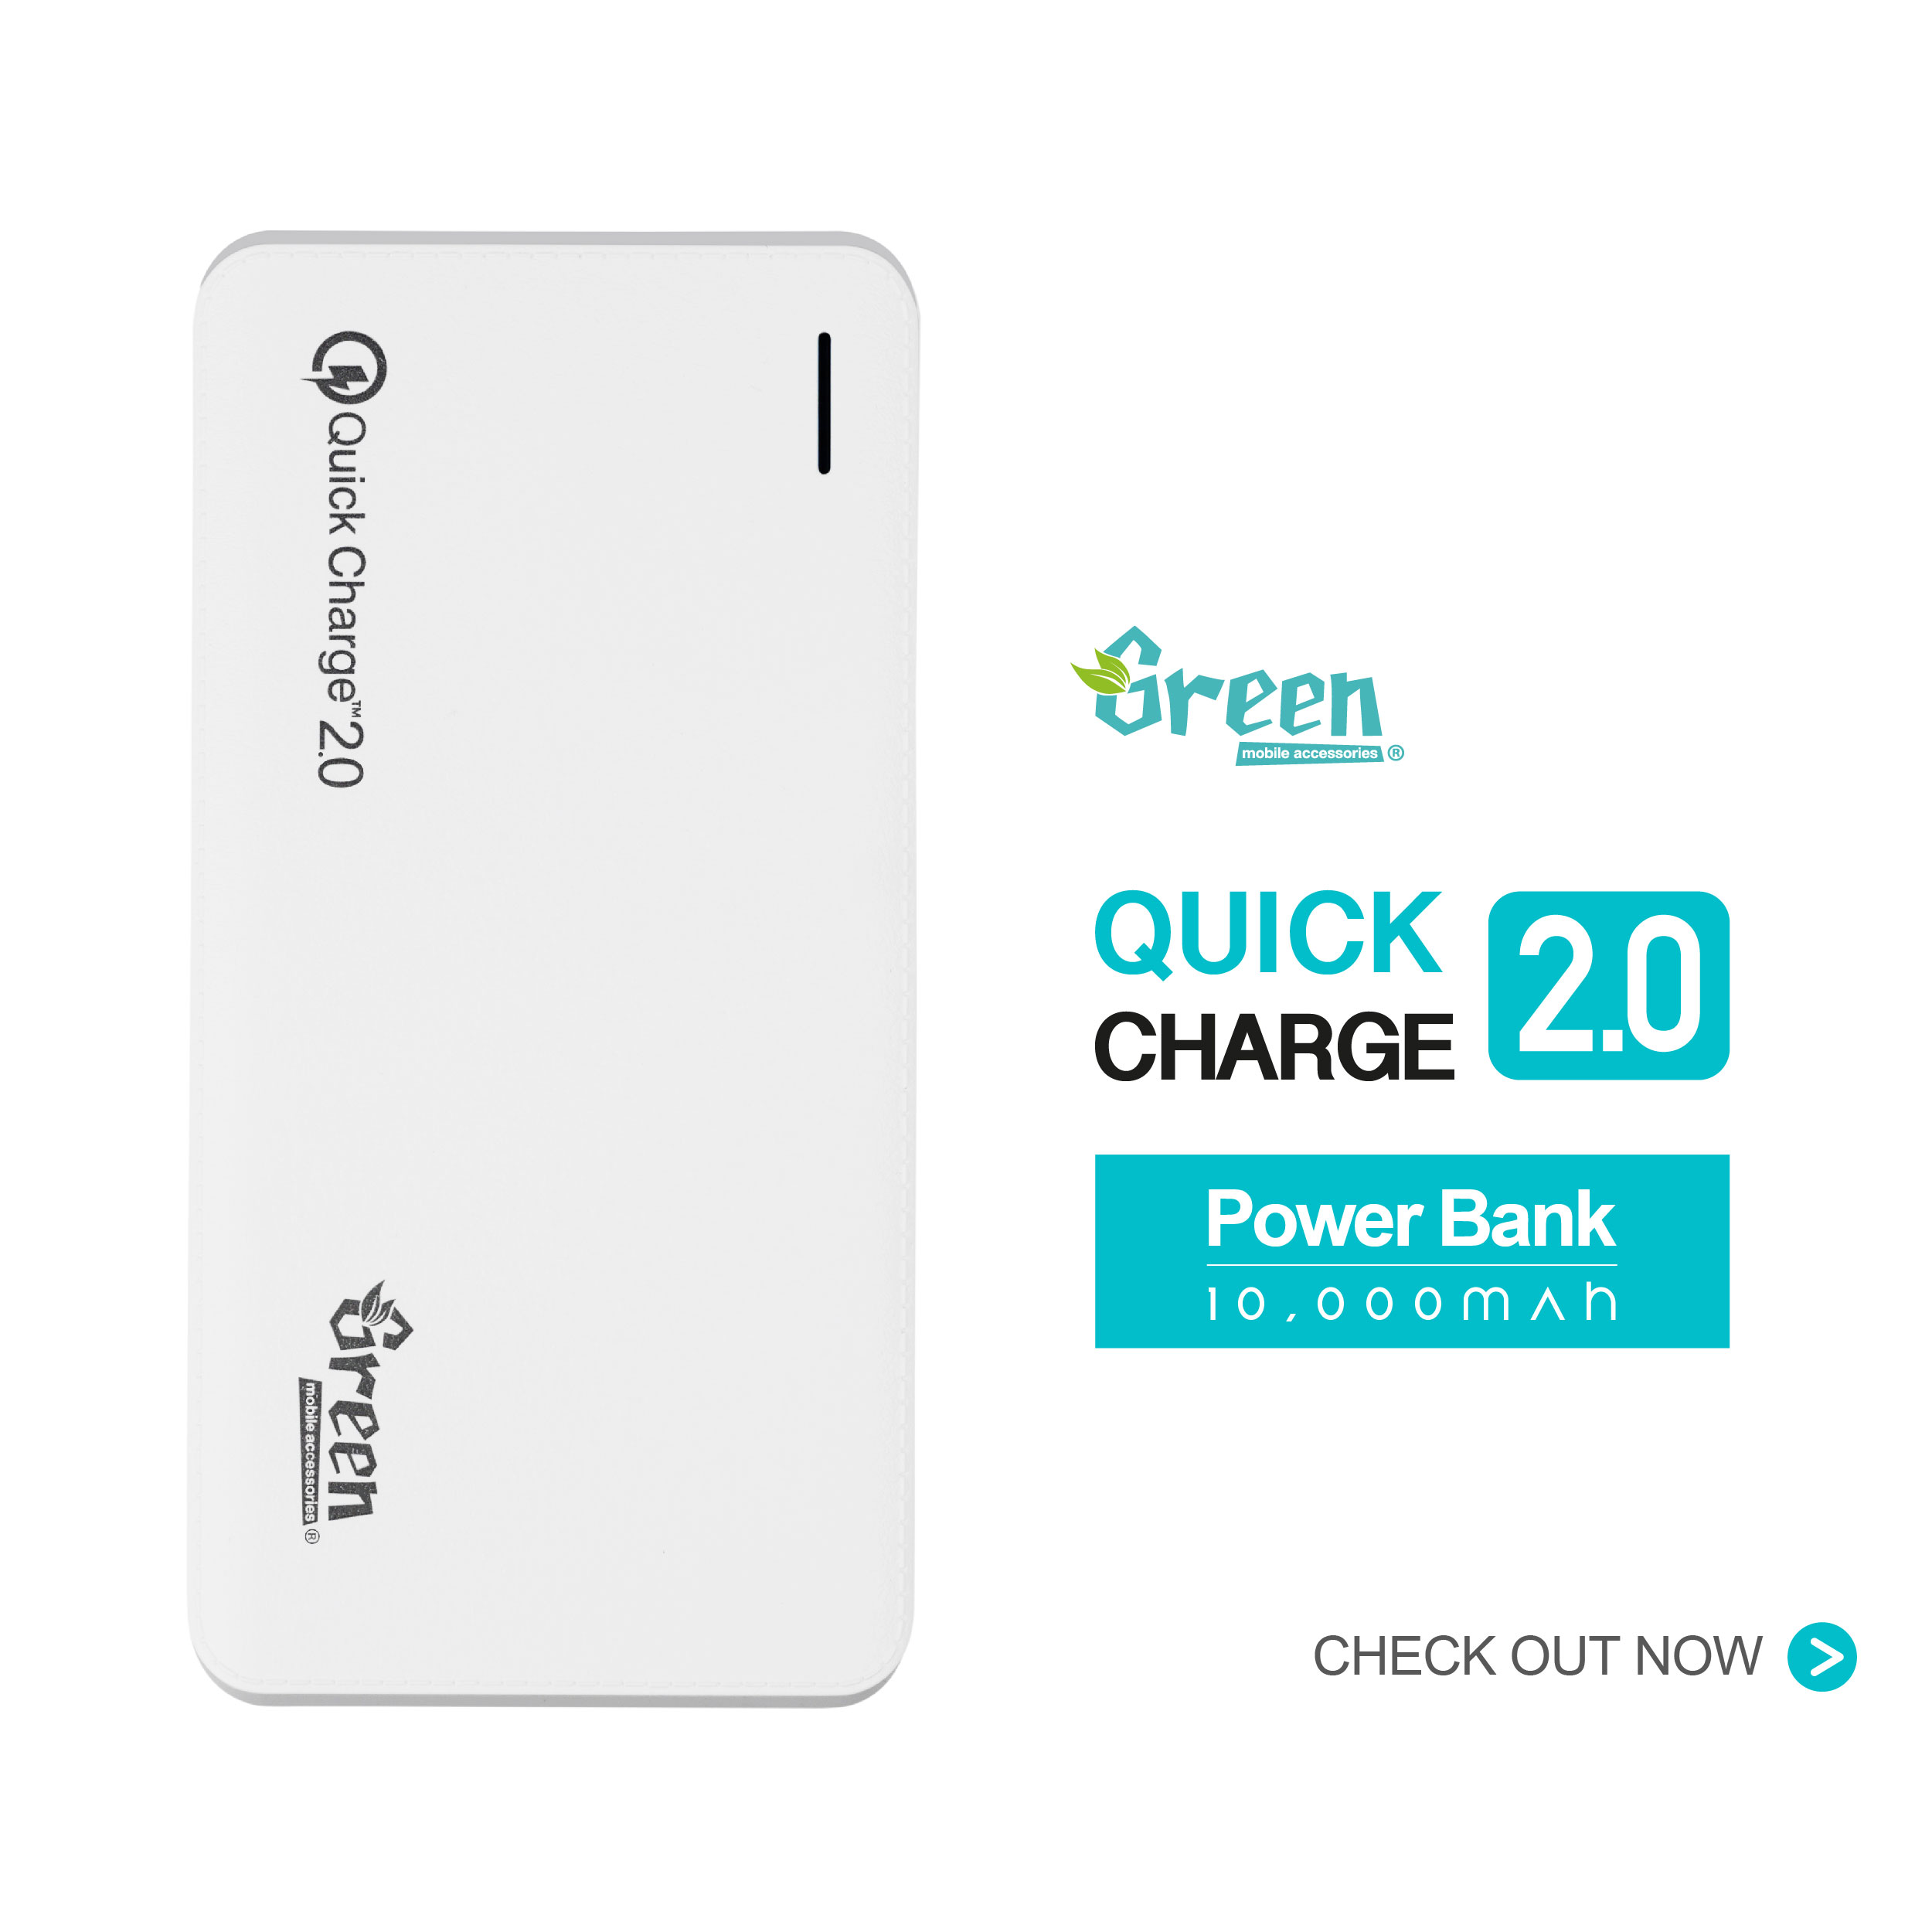 Quick Charge 2.0 10,000mAh 2 USB Port | Power Bank GR-PBQC100